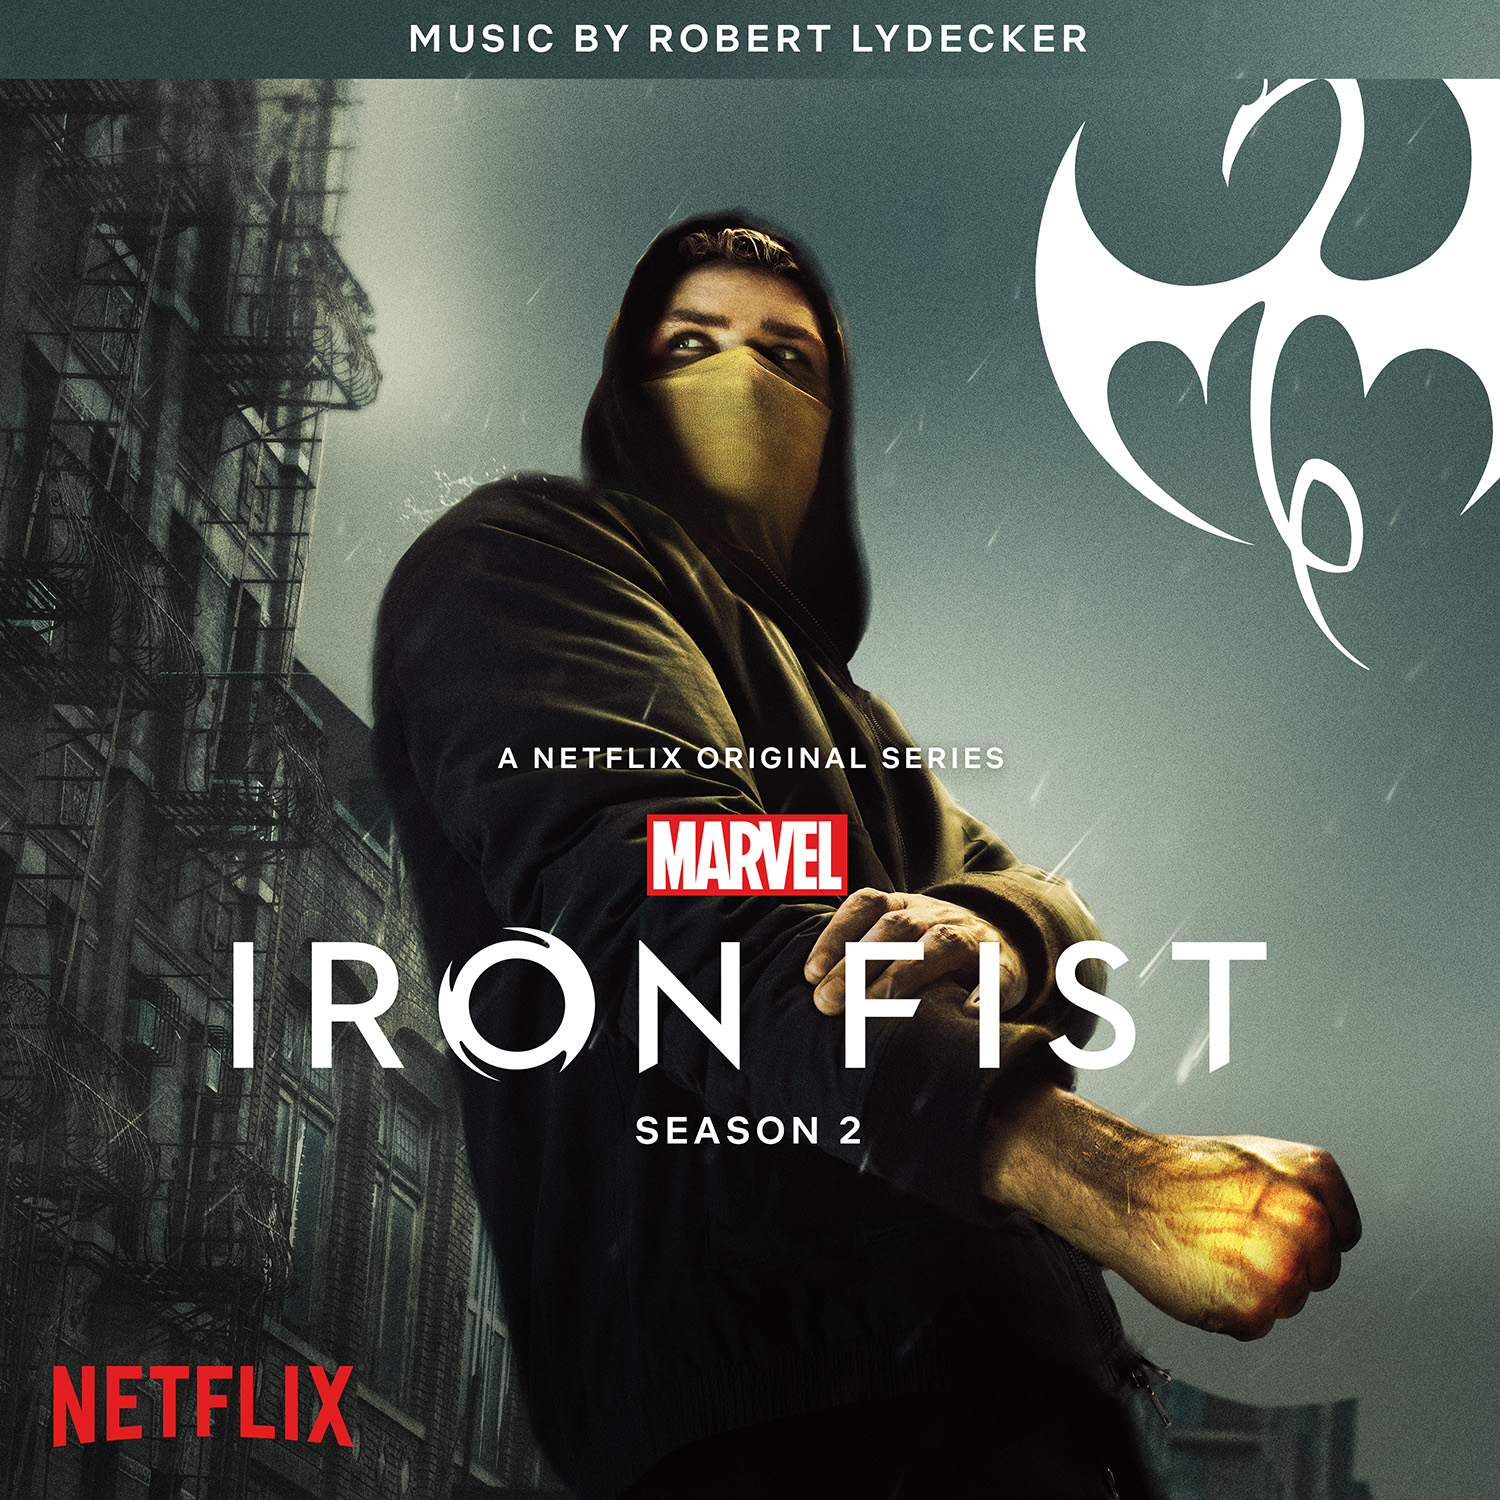 Iron Fist S2 cover image.jpg